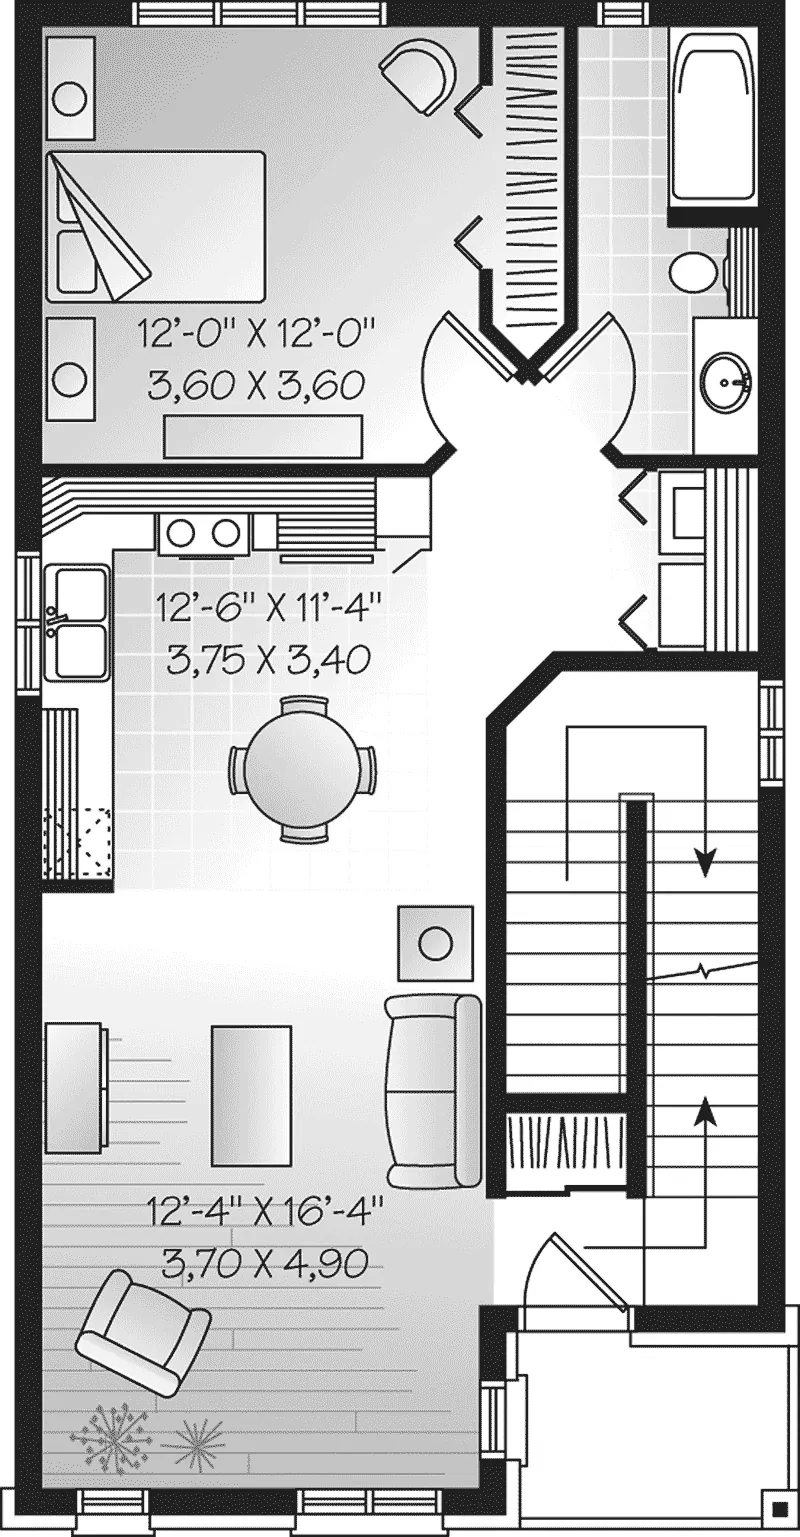 Modern House Plan Second Floor - Dormount Triplex Design Plan032D-0608 - Search House Plans and More